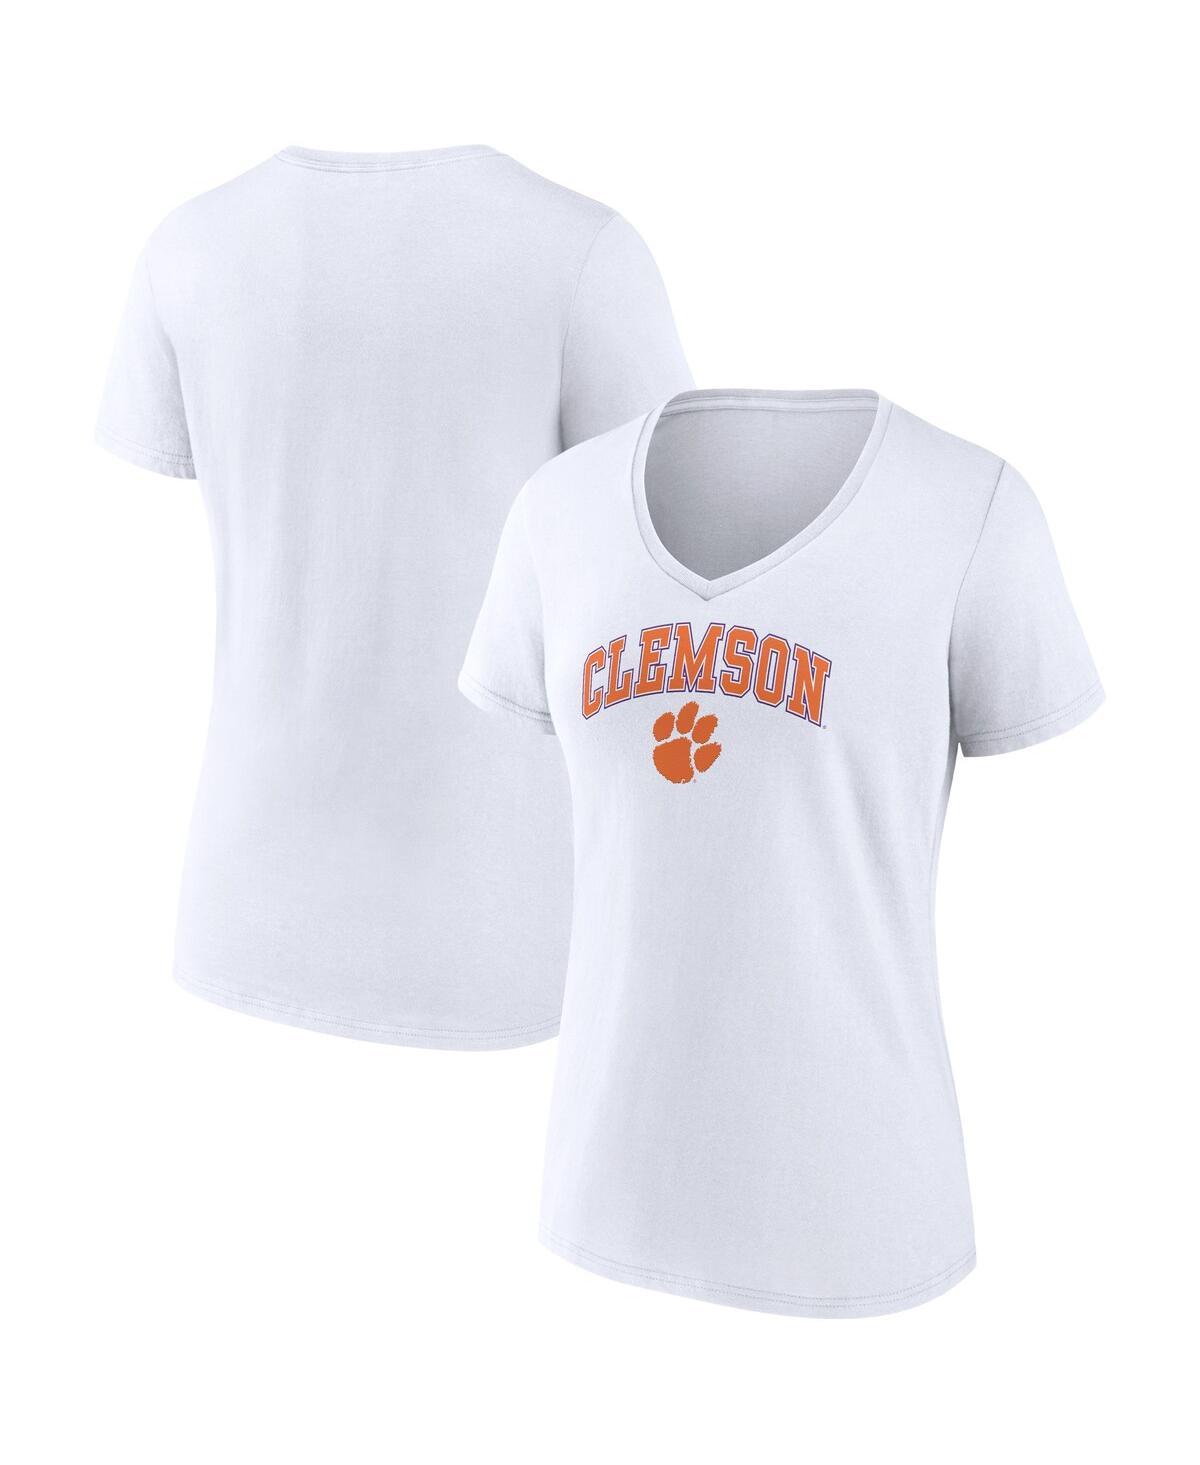 Women's Fanatics White Clemson Tigers Evergreen Campus V-Neck T-shirt - White